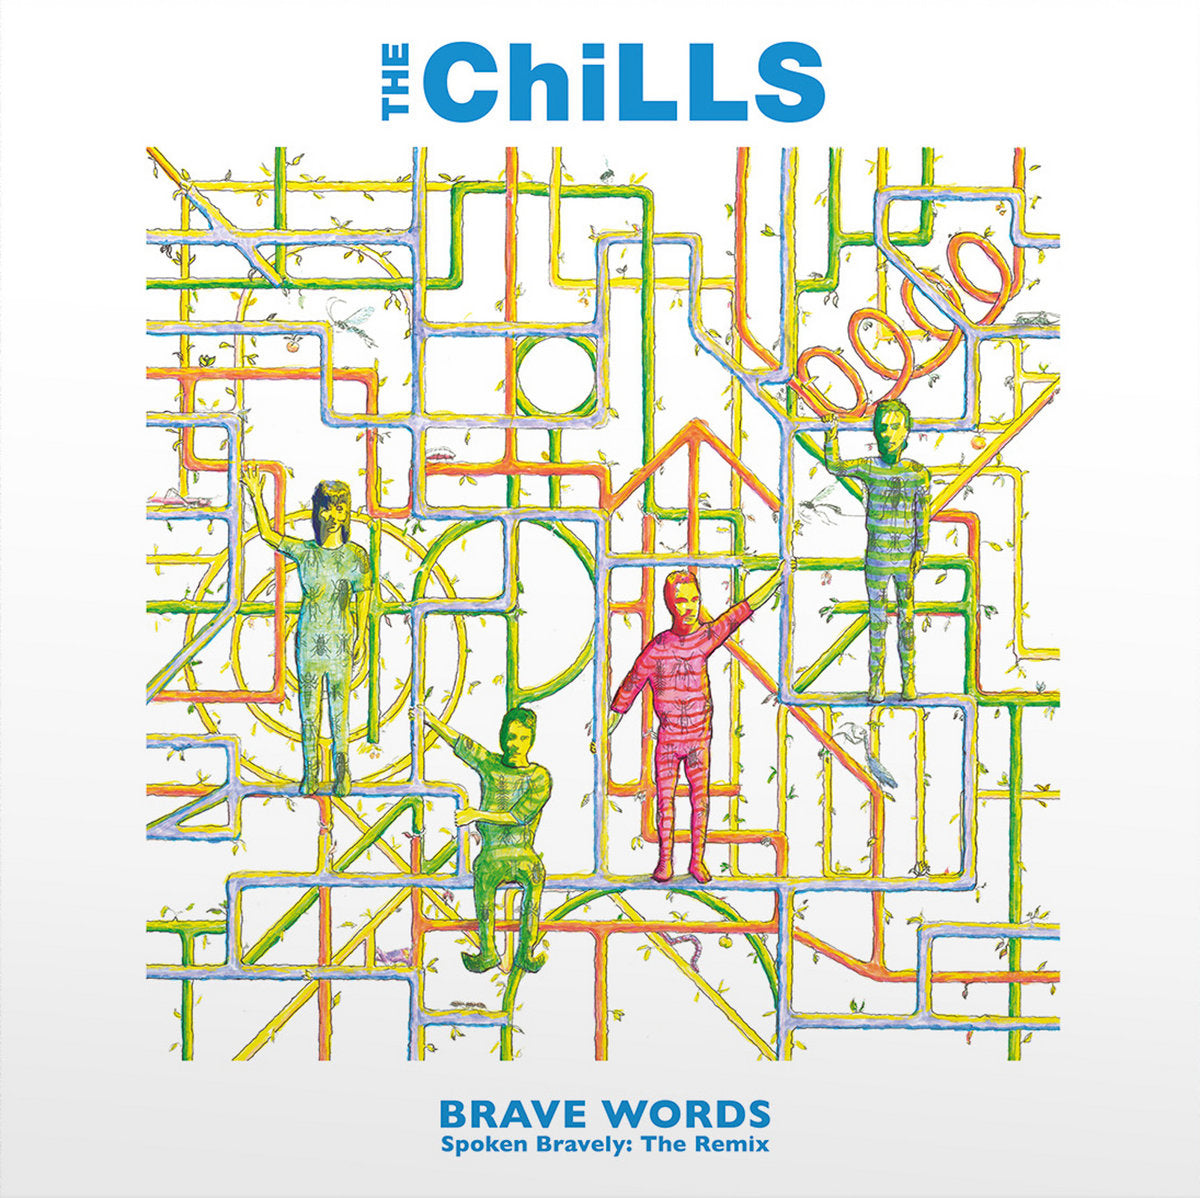 THE CHILLS - BRAVE WORDS (SPOKEN BRAVELY: THE REMIX) Vinyl 2xLP